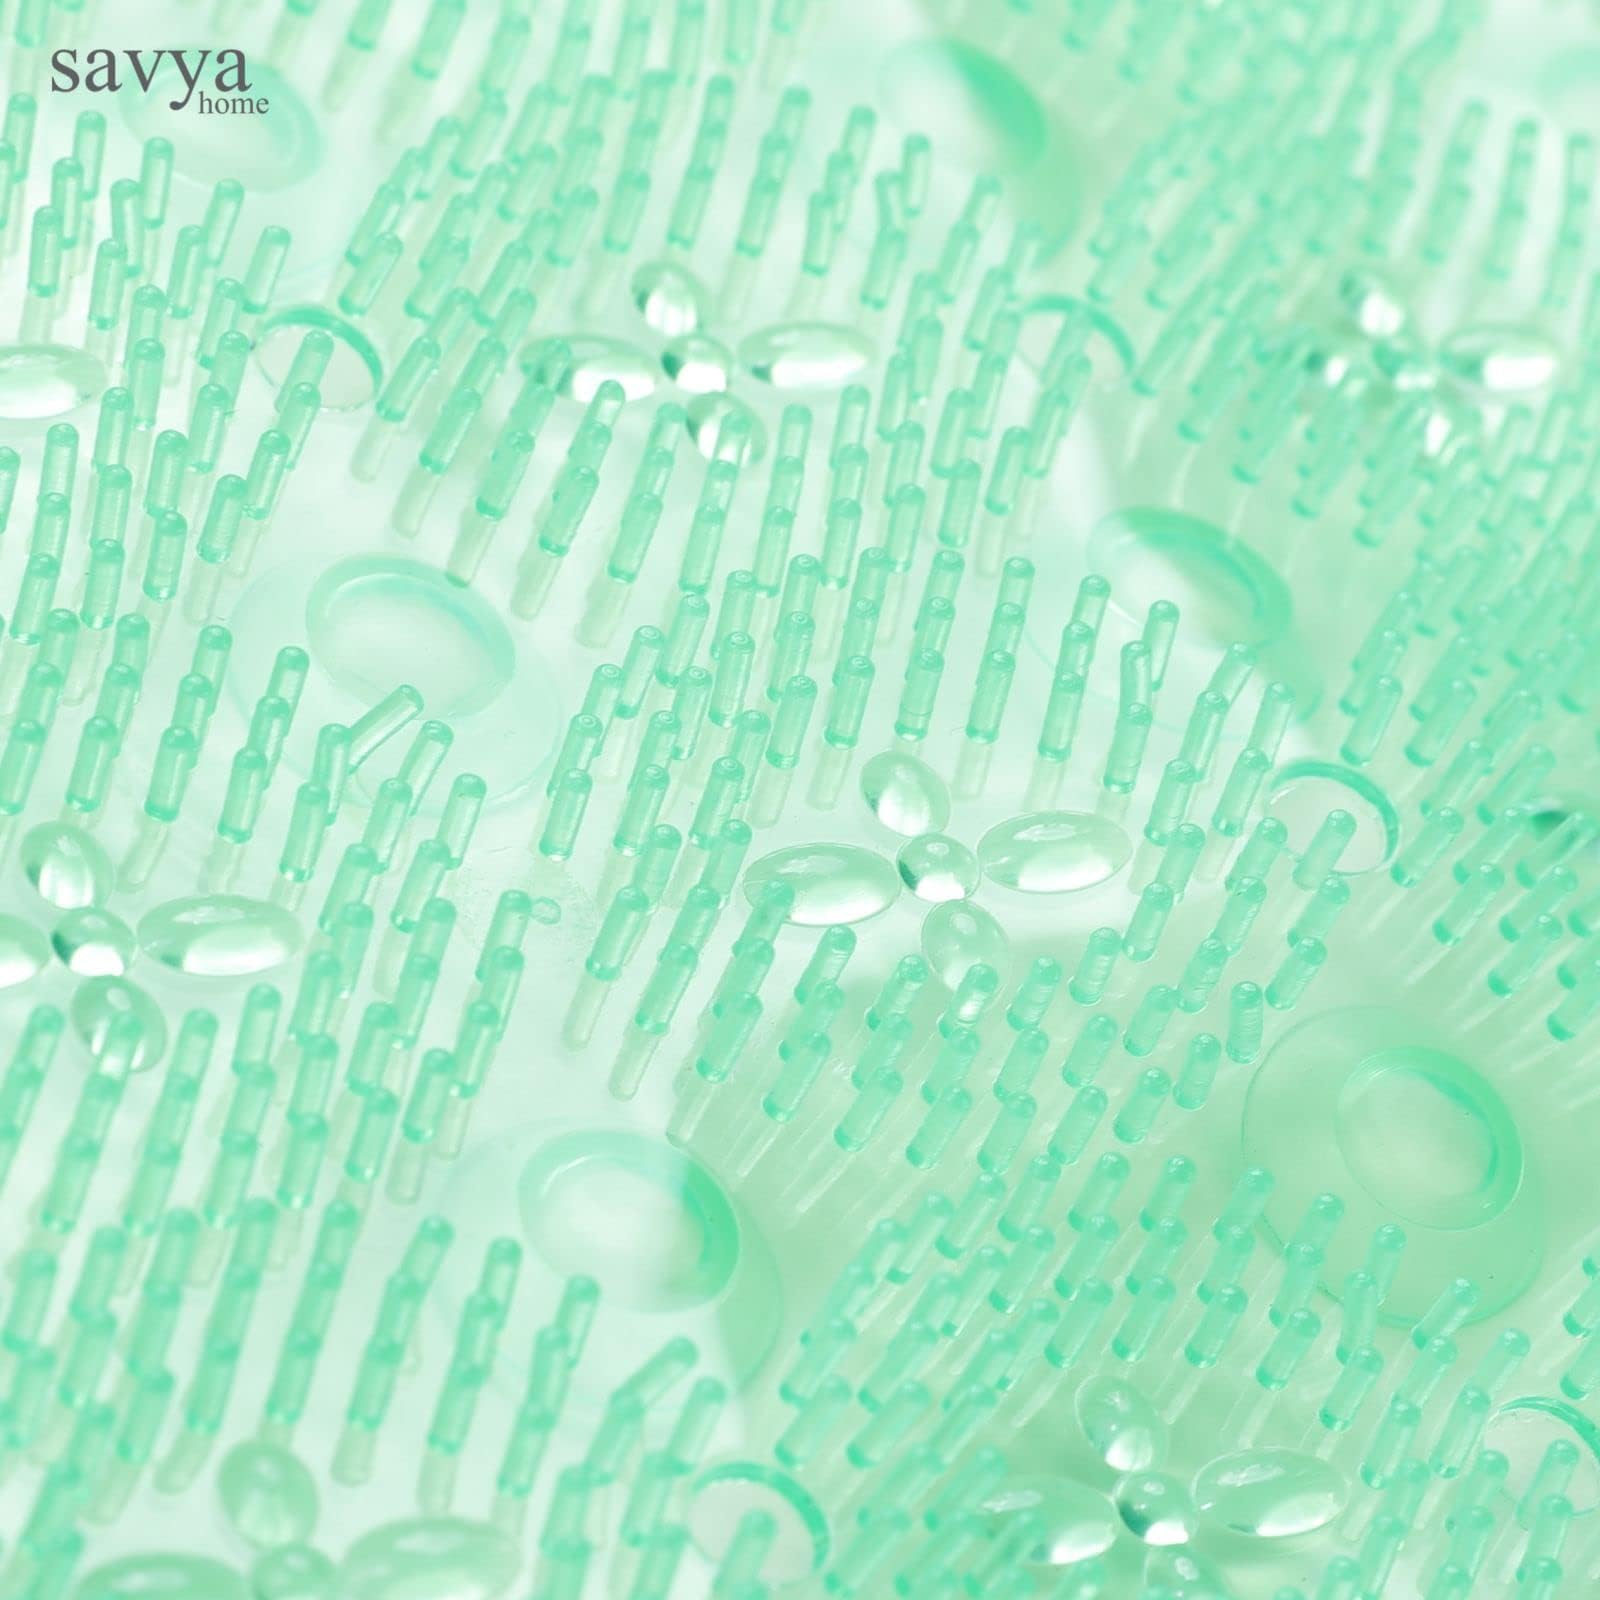 Savya Home Anti Skid Bath Mat for Bathroom, PVC Bath Mat with Suction Cup, Machine Washable Floor Mat (67x37 cm)|Light Green & Light Blue